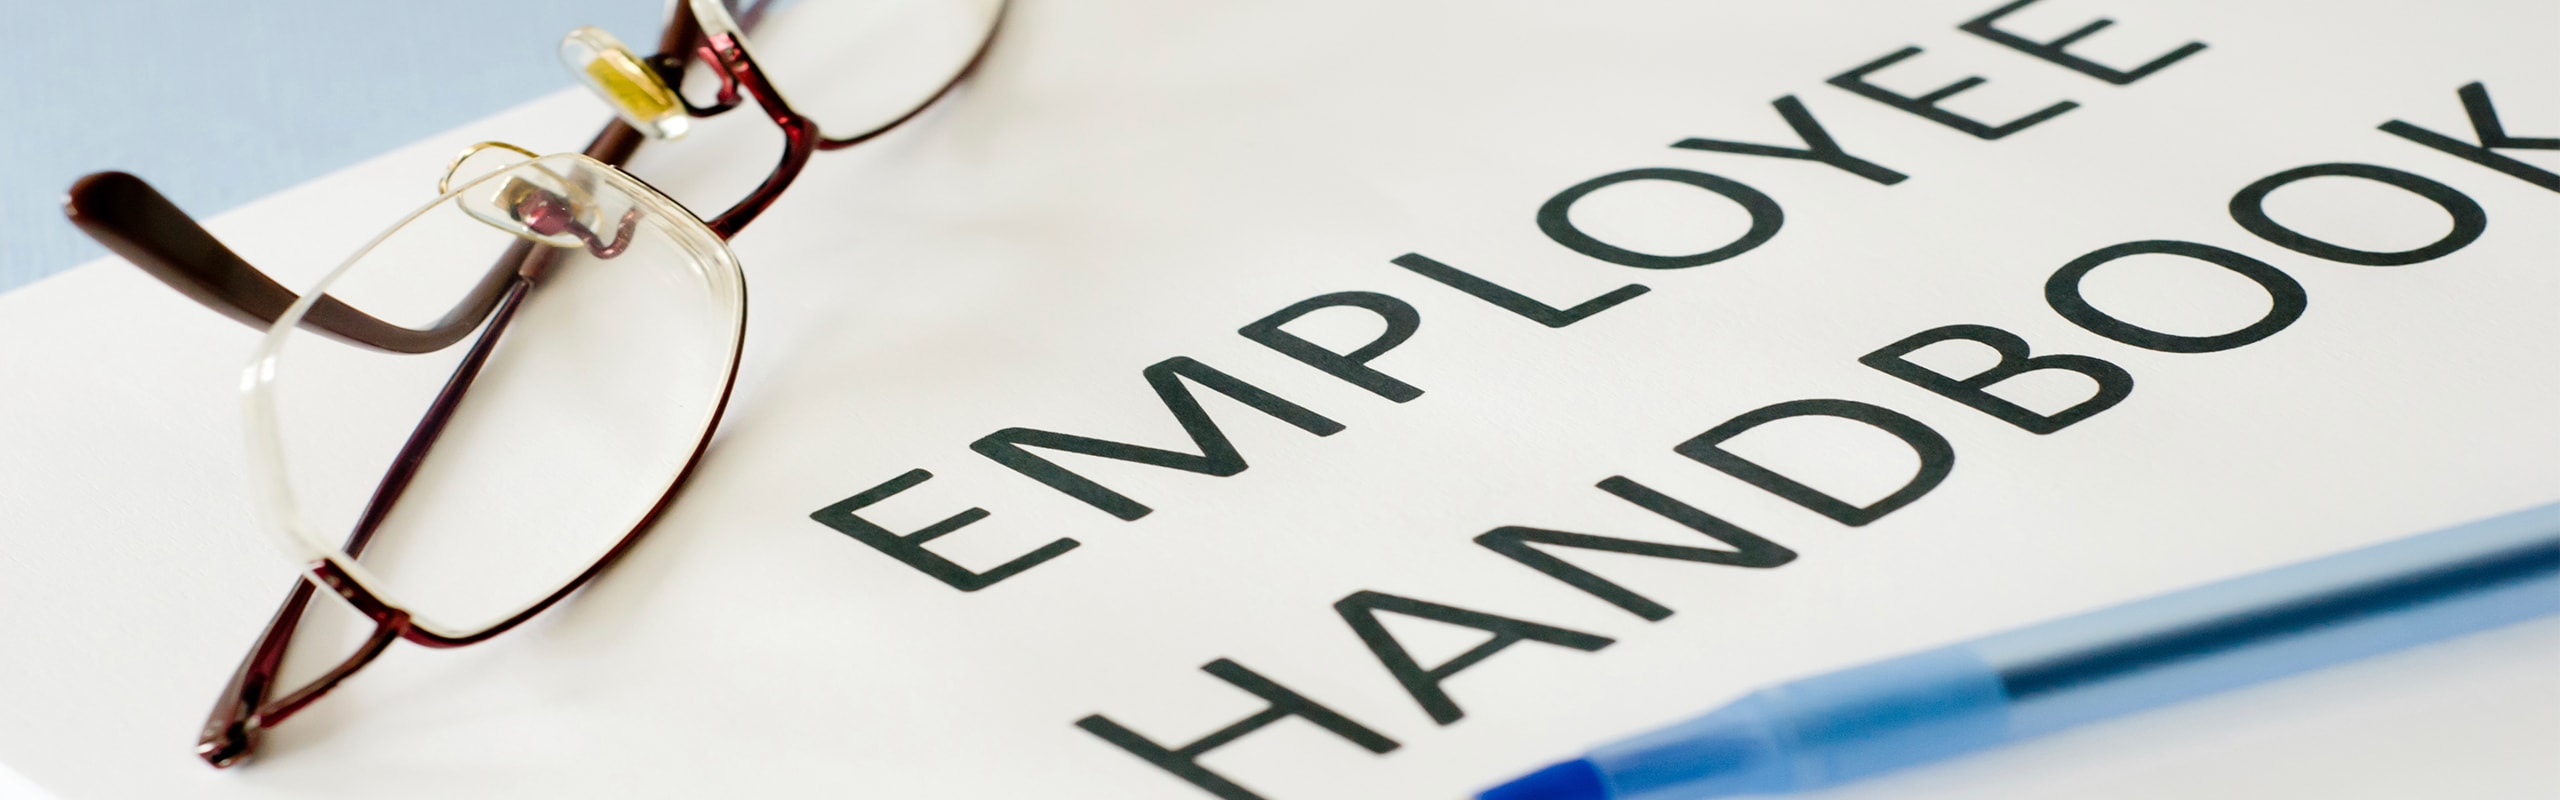 Why you need an employee handbook